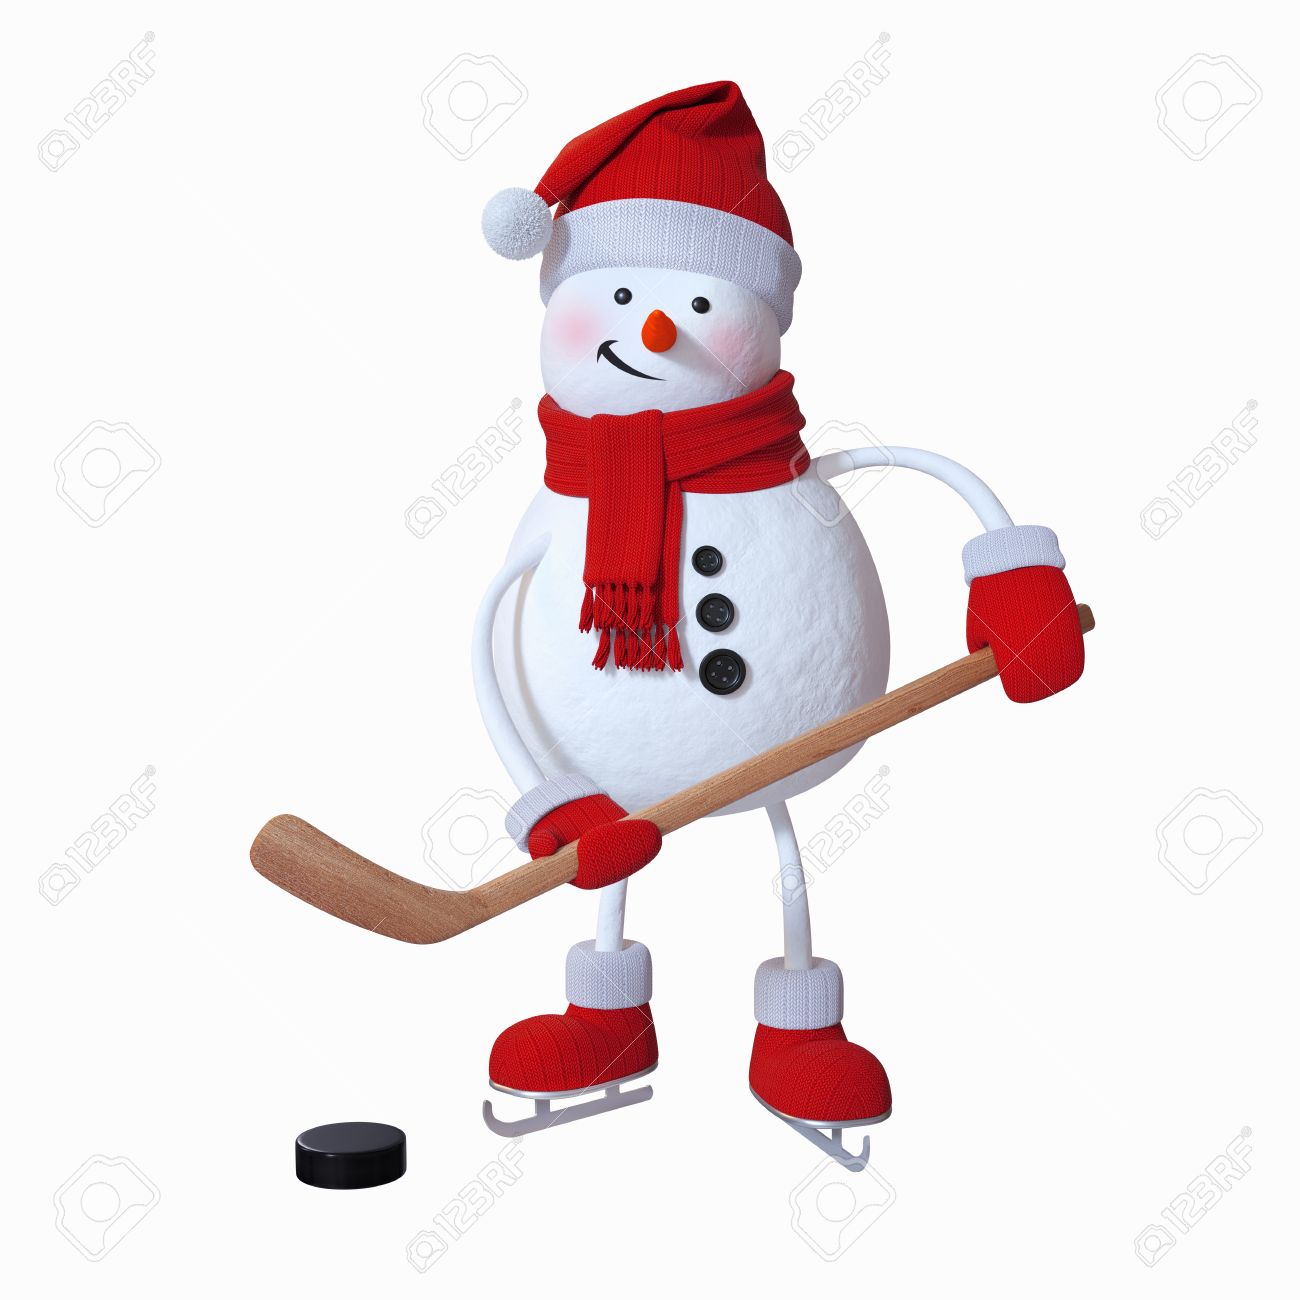 hockey clipart snowman